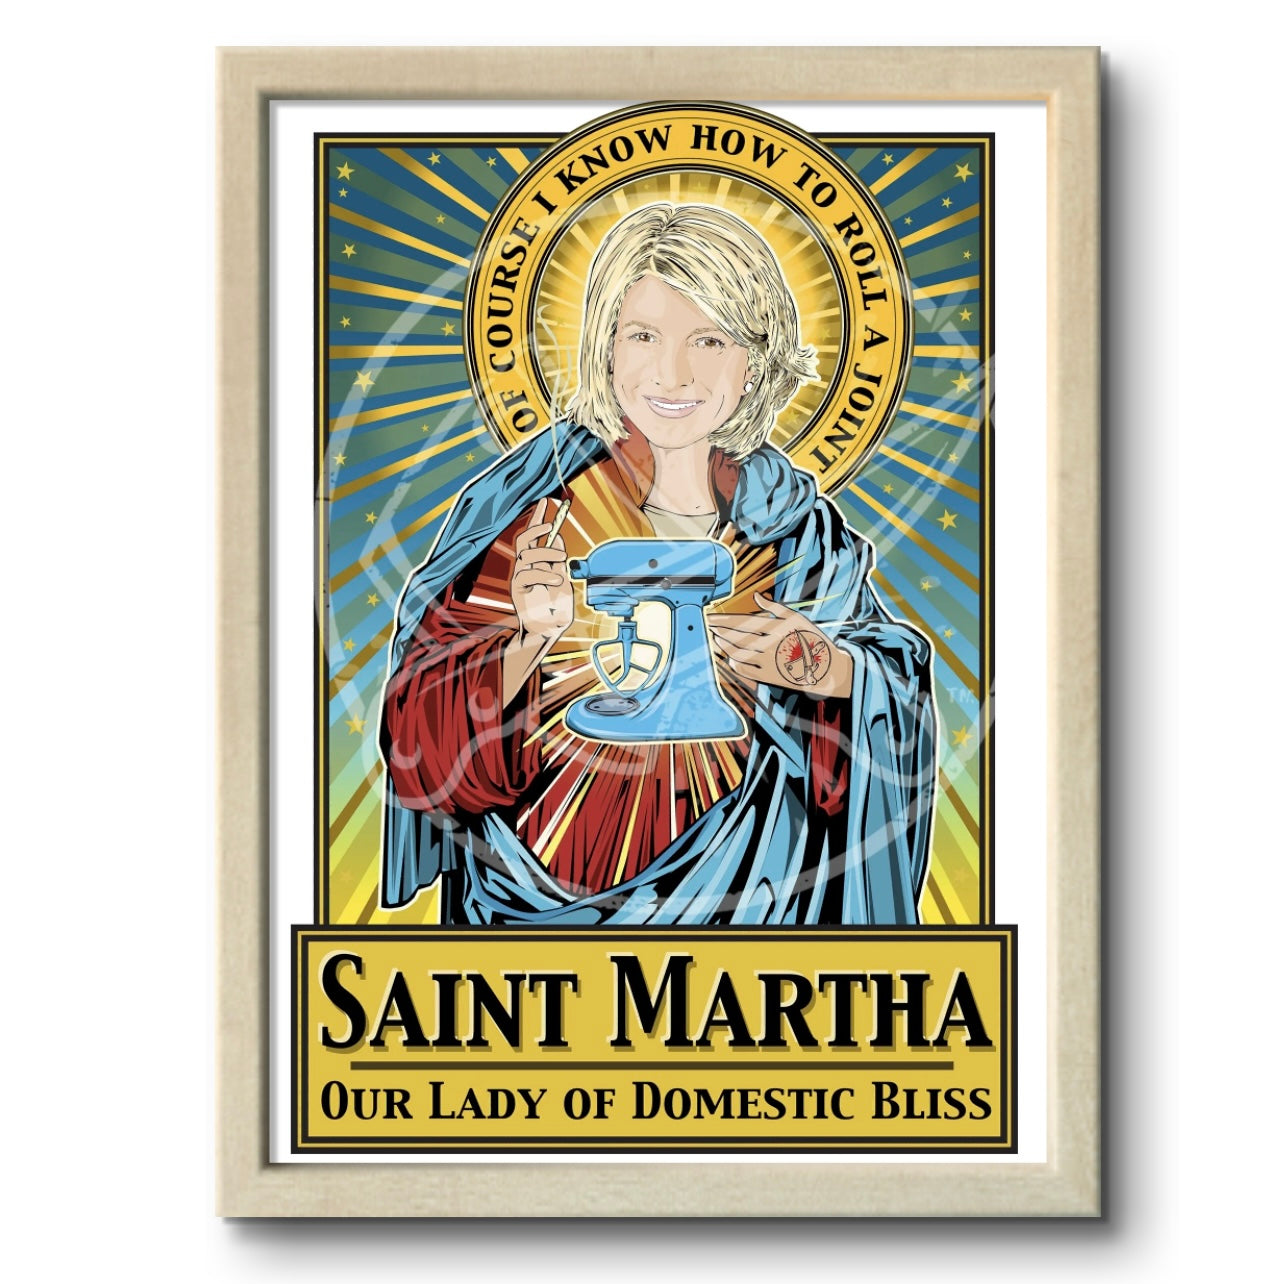 Saint Martha Our Lady of Domestic Bliss Poster Cleaverandblade.com